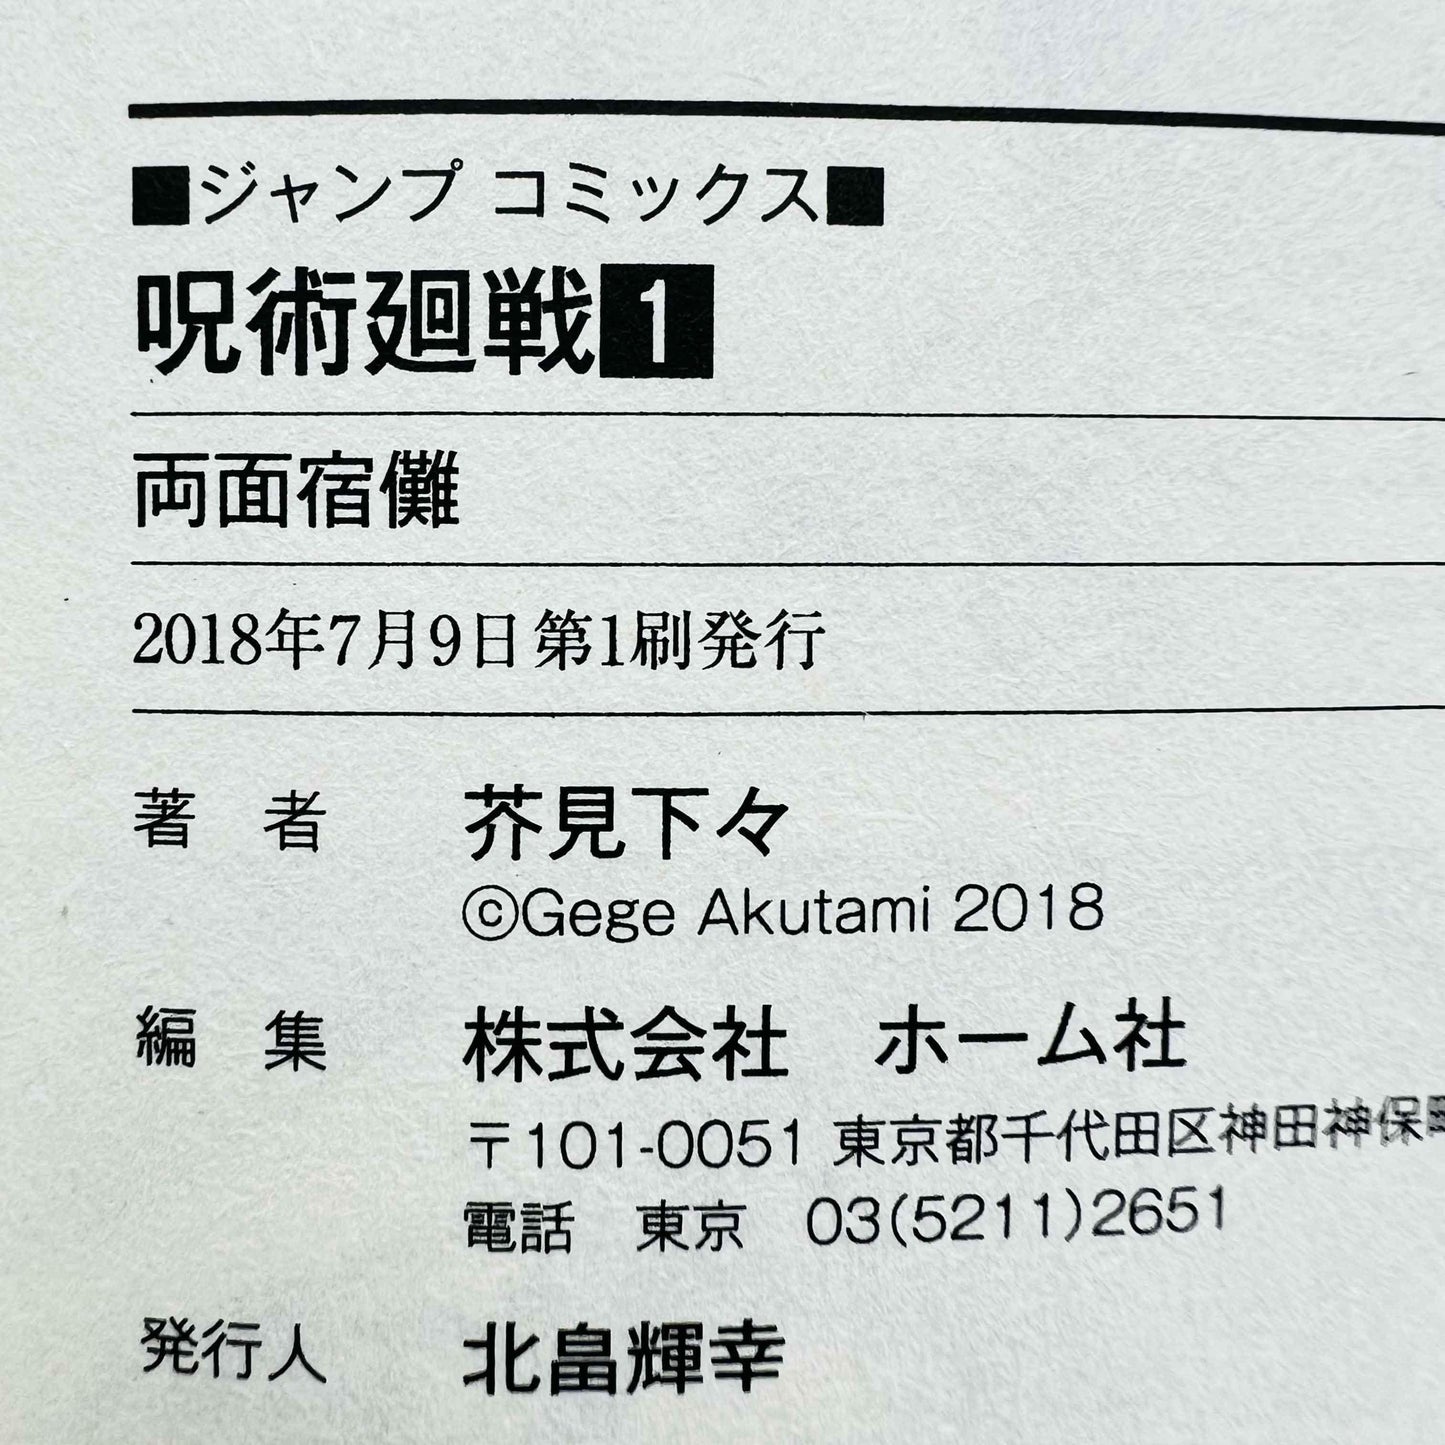 Jujutsu Kaisen - Volume 01 - 1stPrint.net - 1st First Print Edition Manga Store - M-KAISEN-01-007